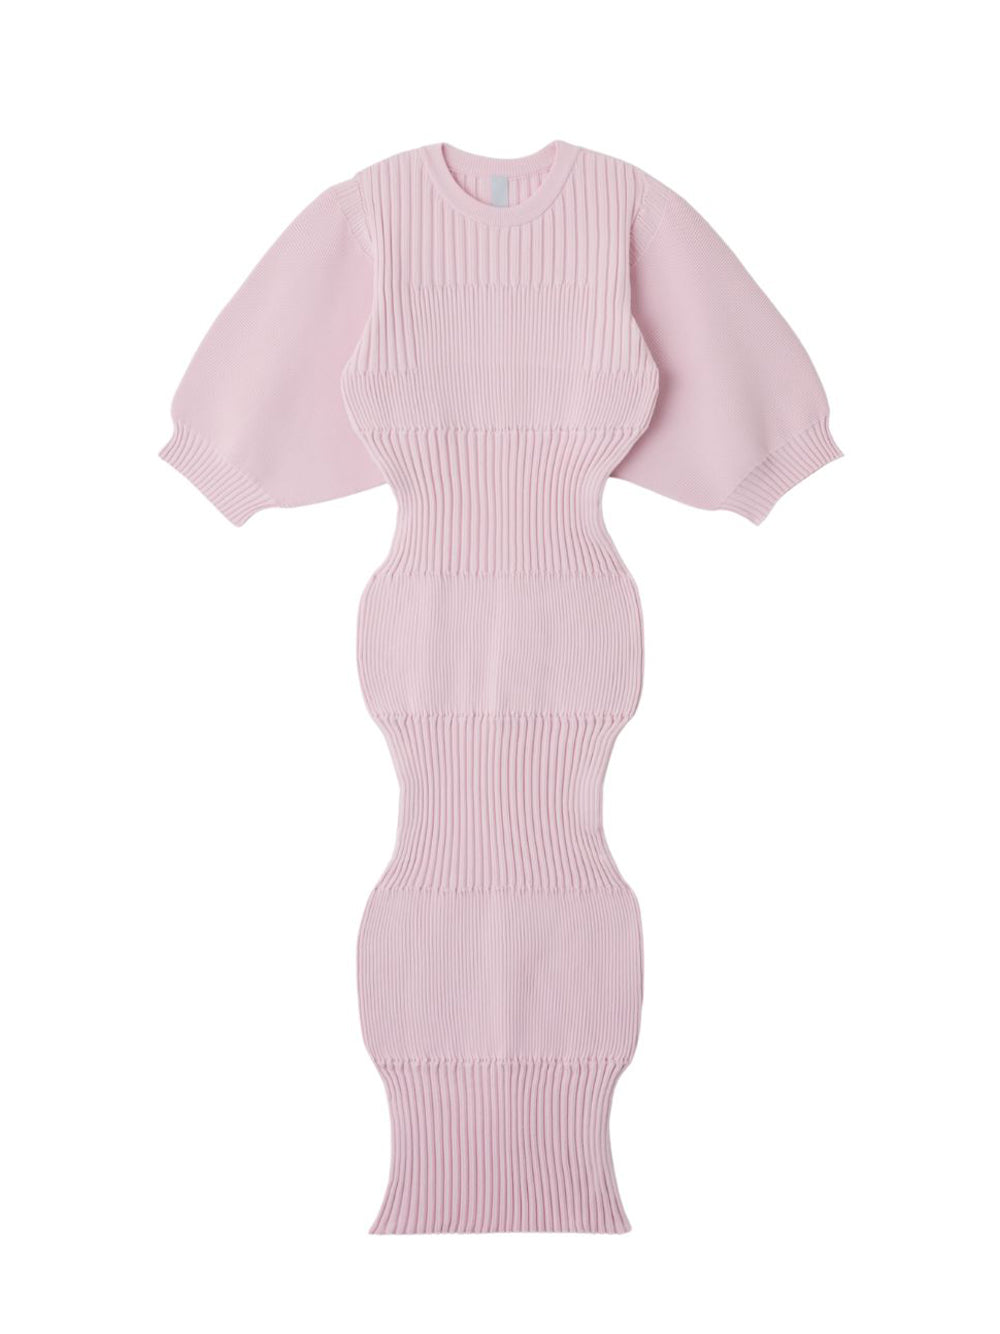 Fluted Short Puff Sleeve Dress (Pastel Pink)